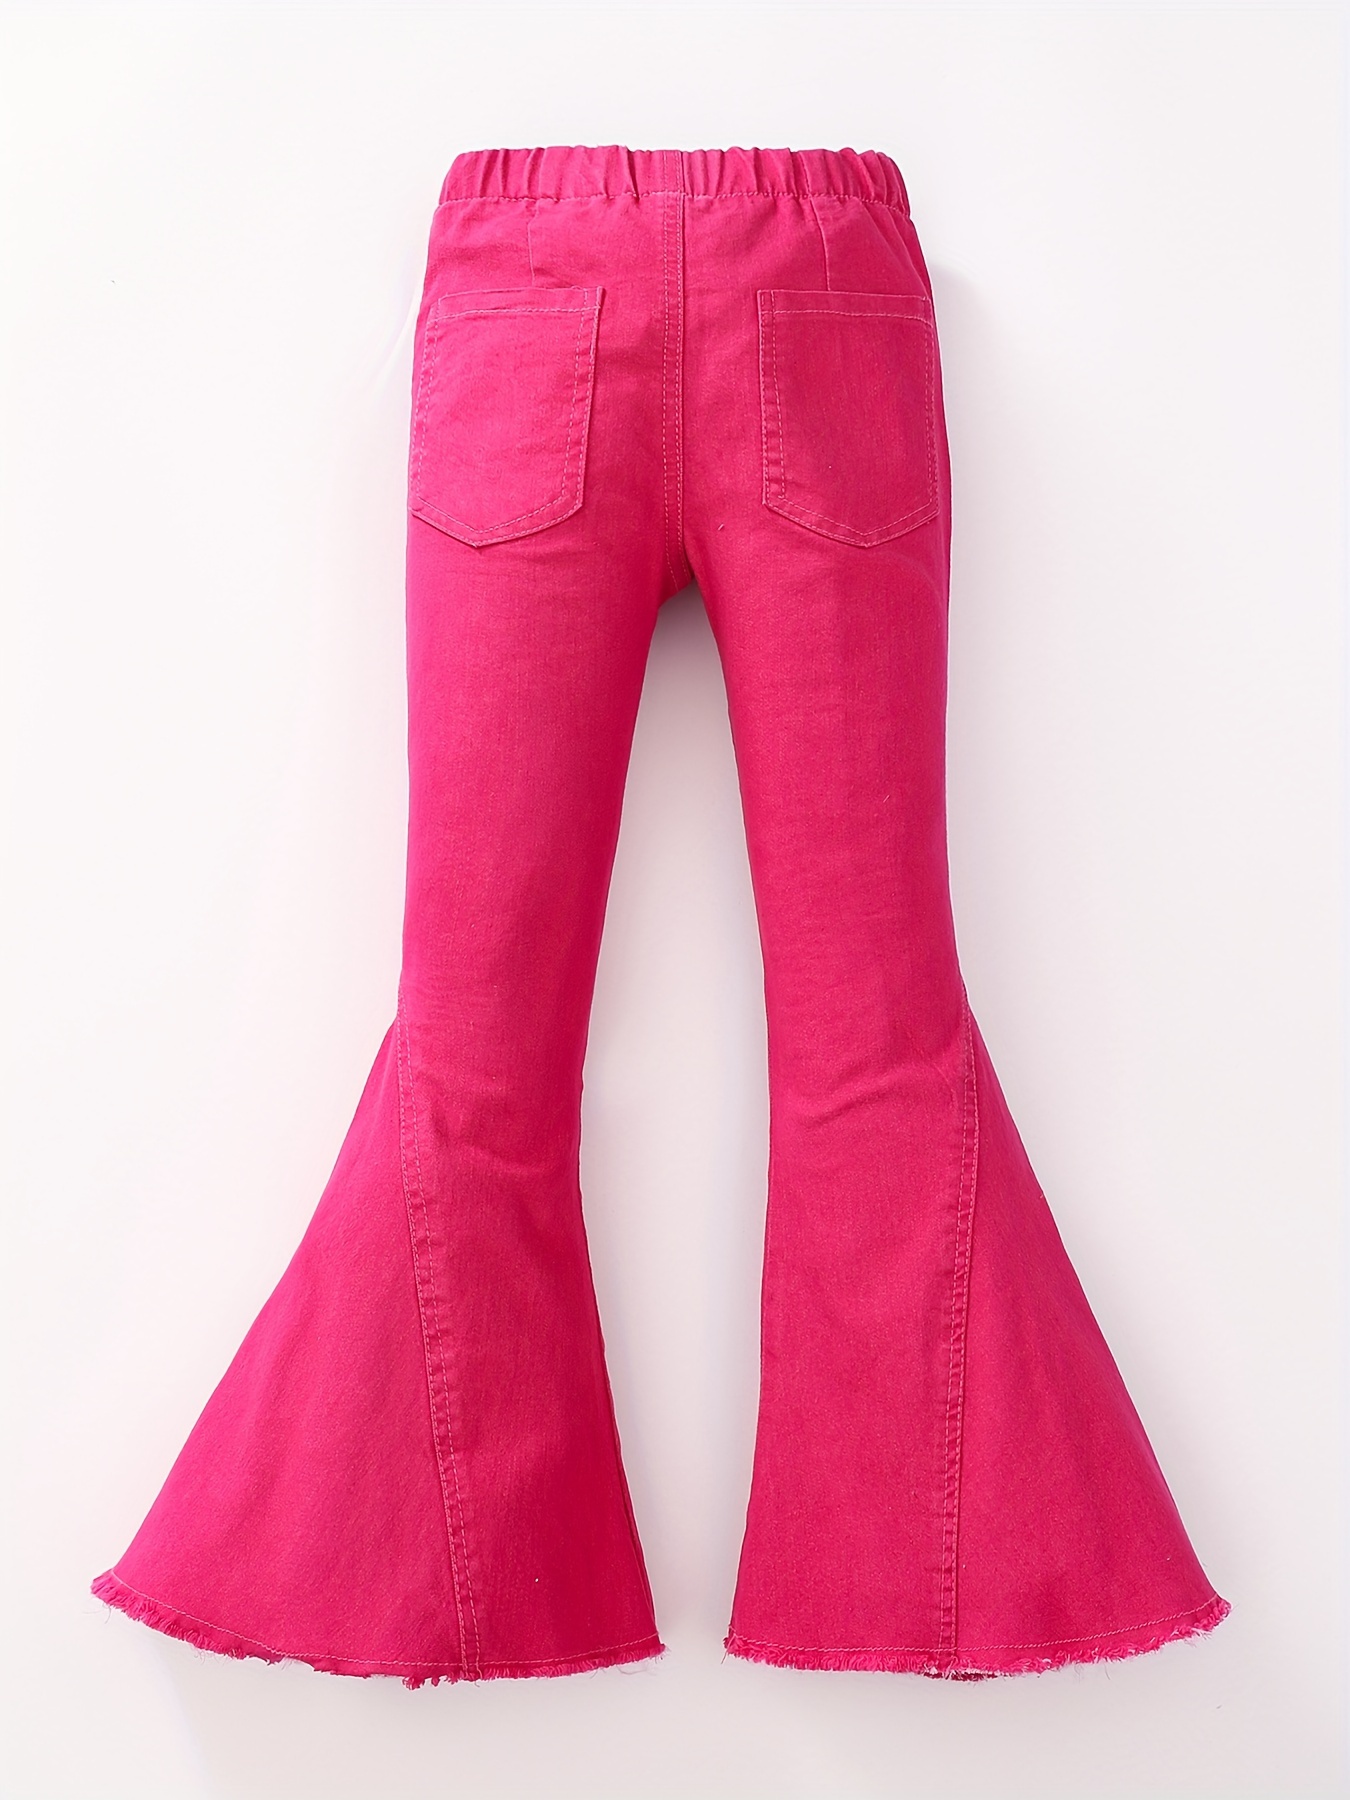 Women's Denim Bell-bottom Pants Jeans Trousers High Waist Slim Fit Fishtail  Chic